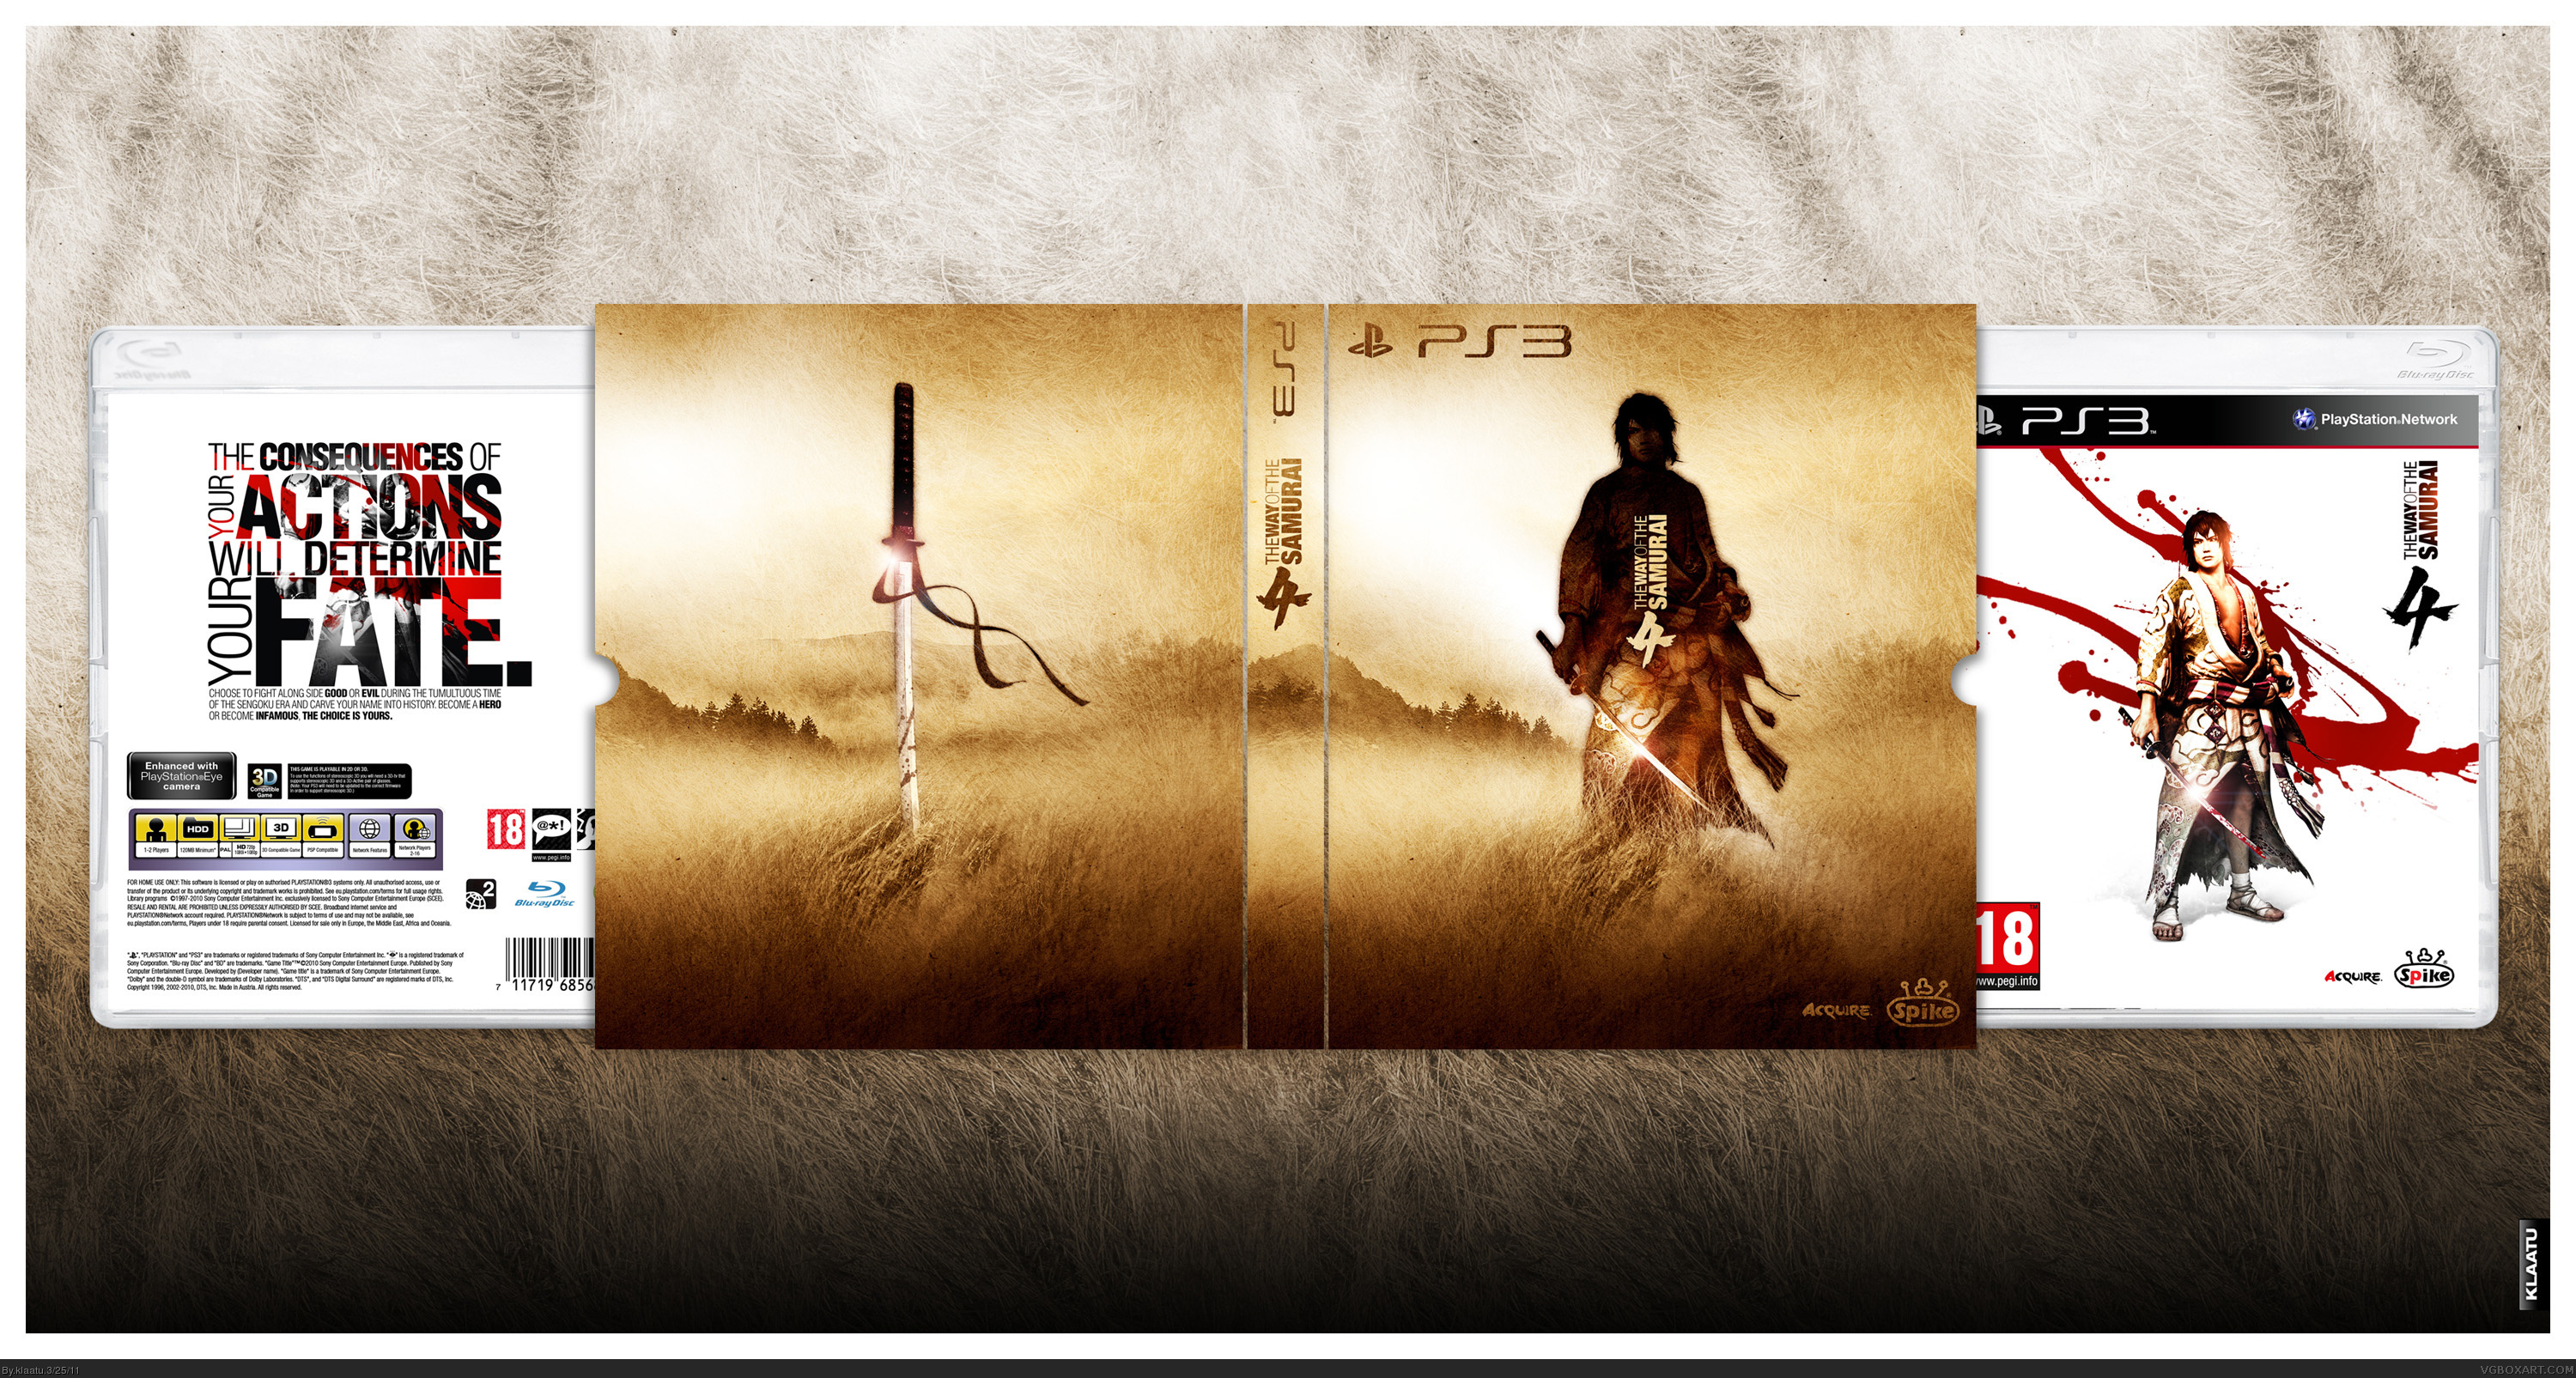 The Way Of The Samurai 4 box cover